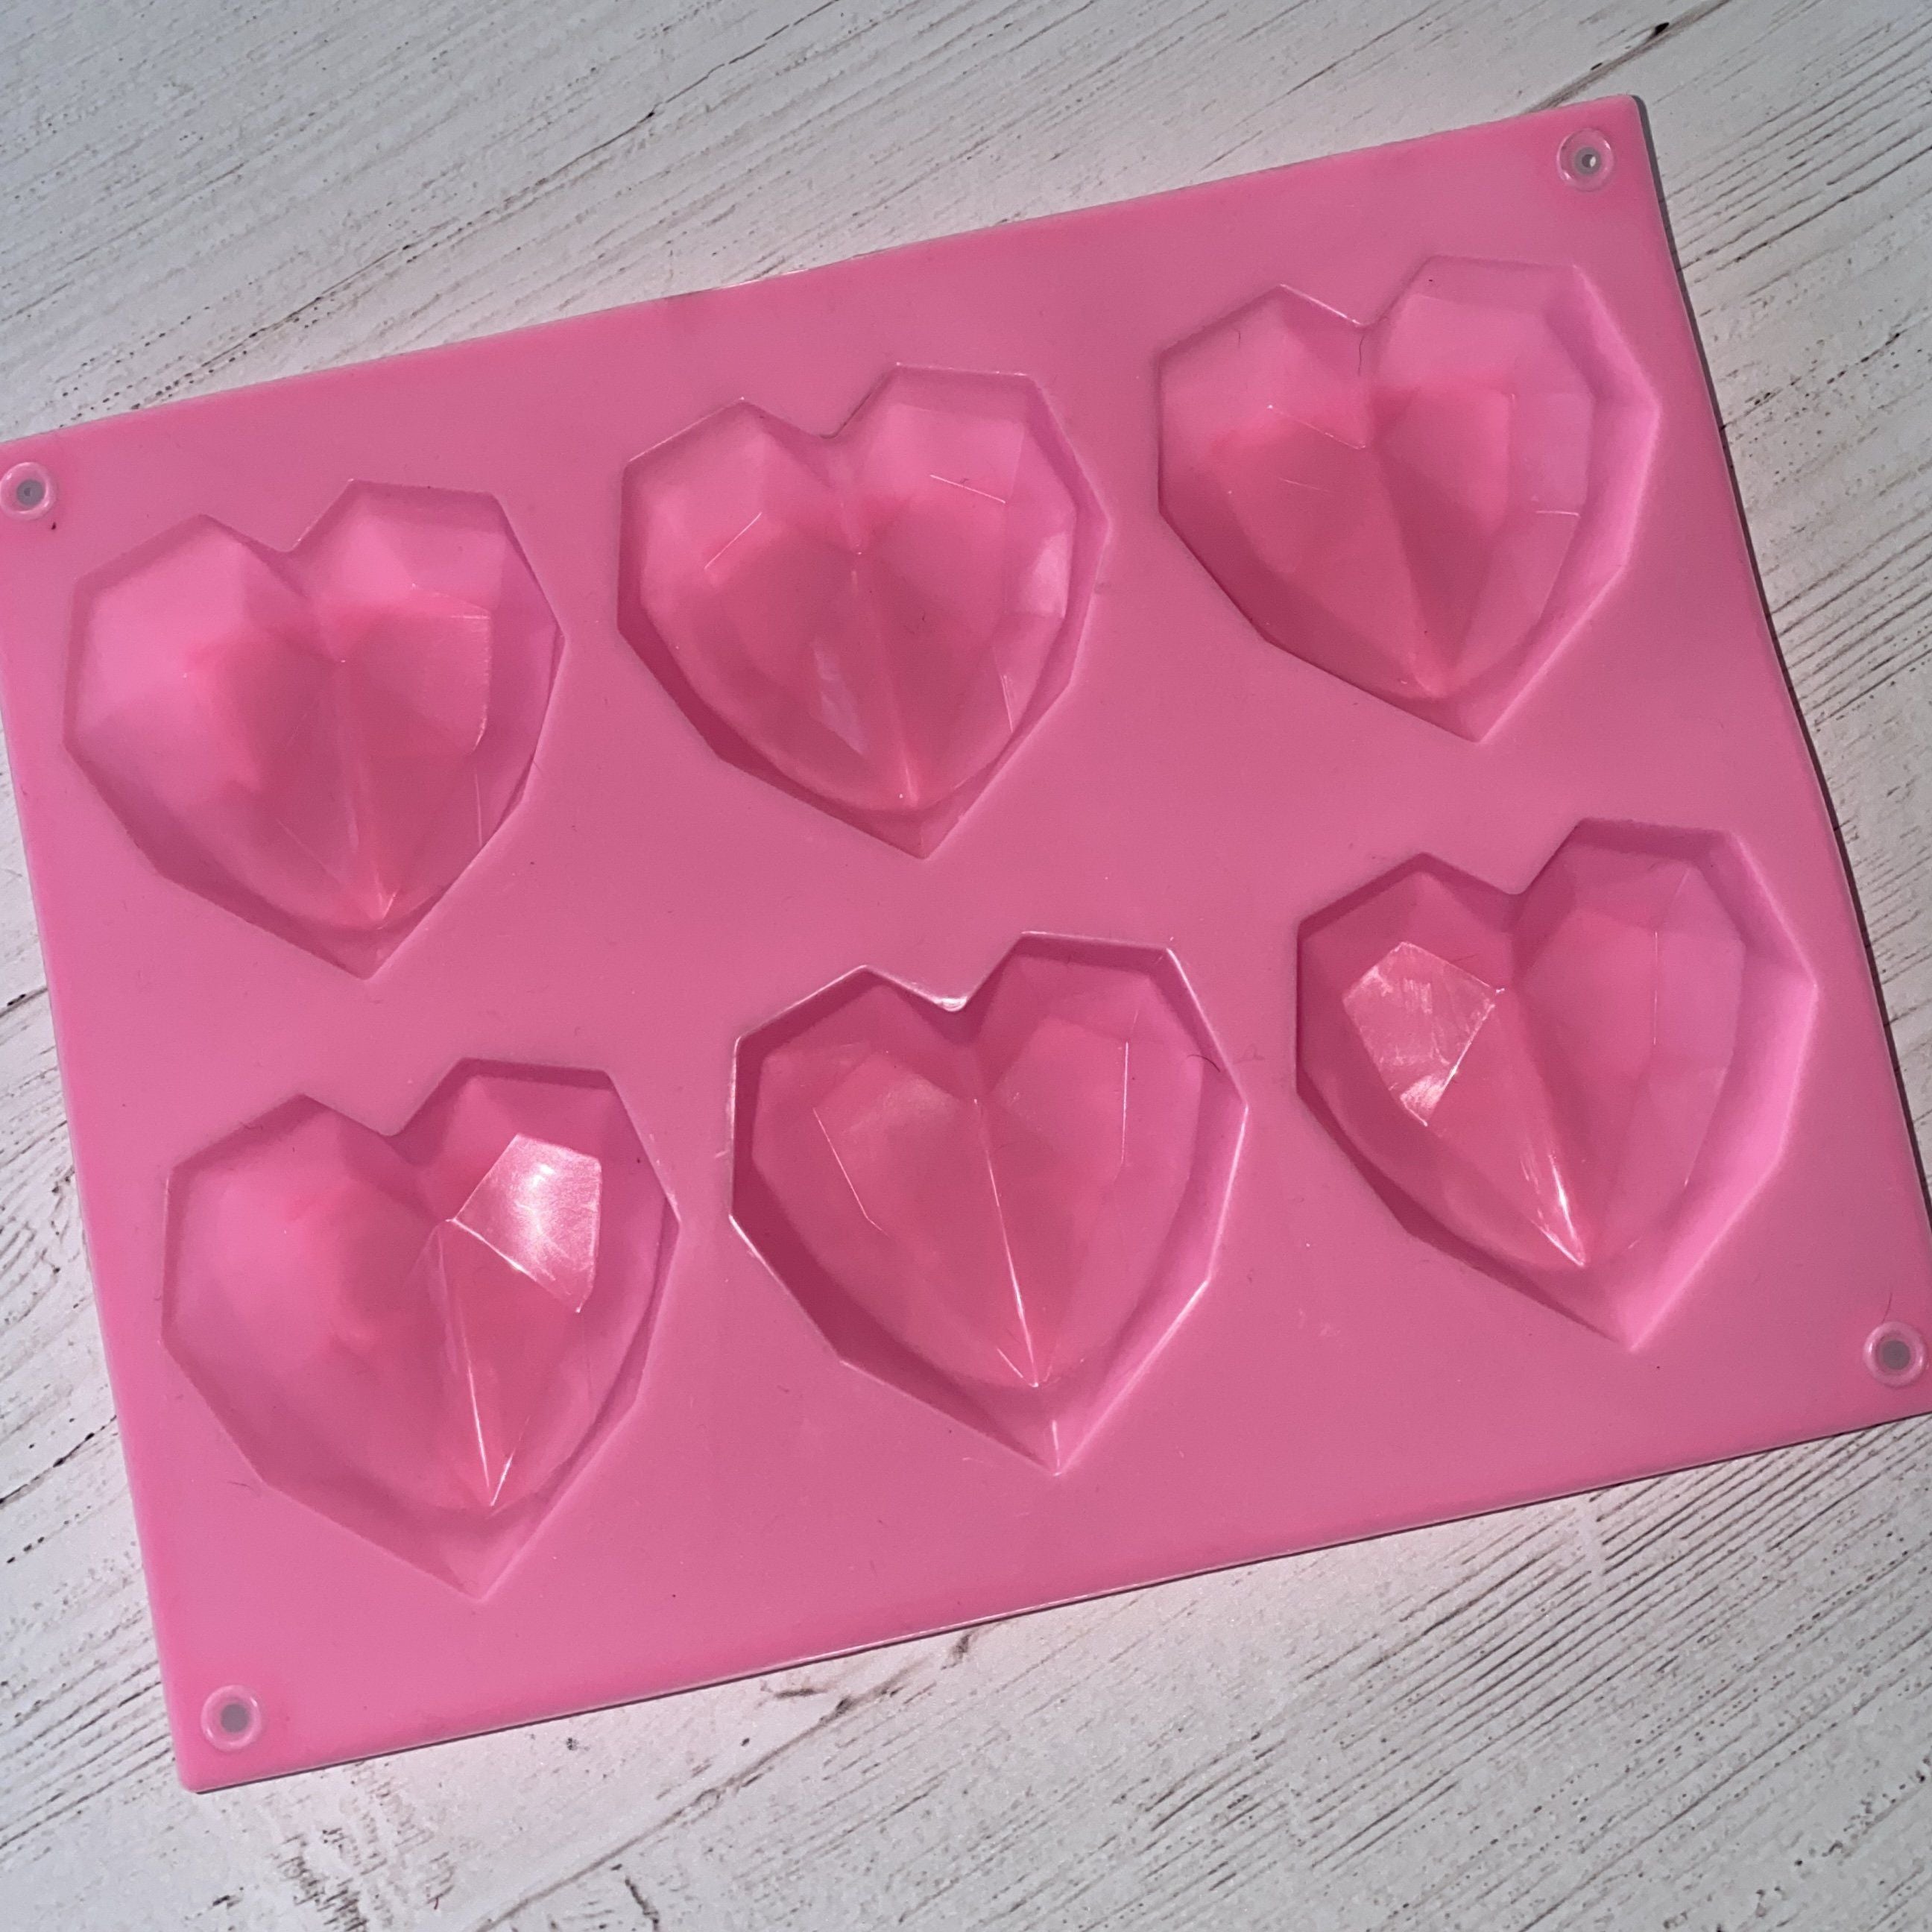 SHENHONG Chocolate Molds Silicone Heart-Shaped Geometric Texture